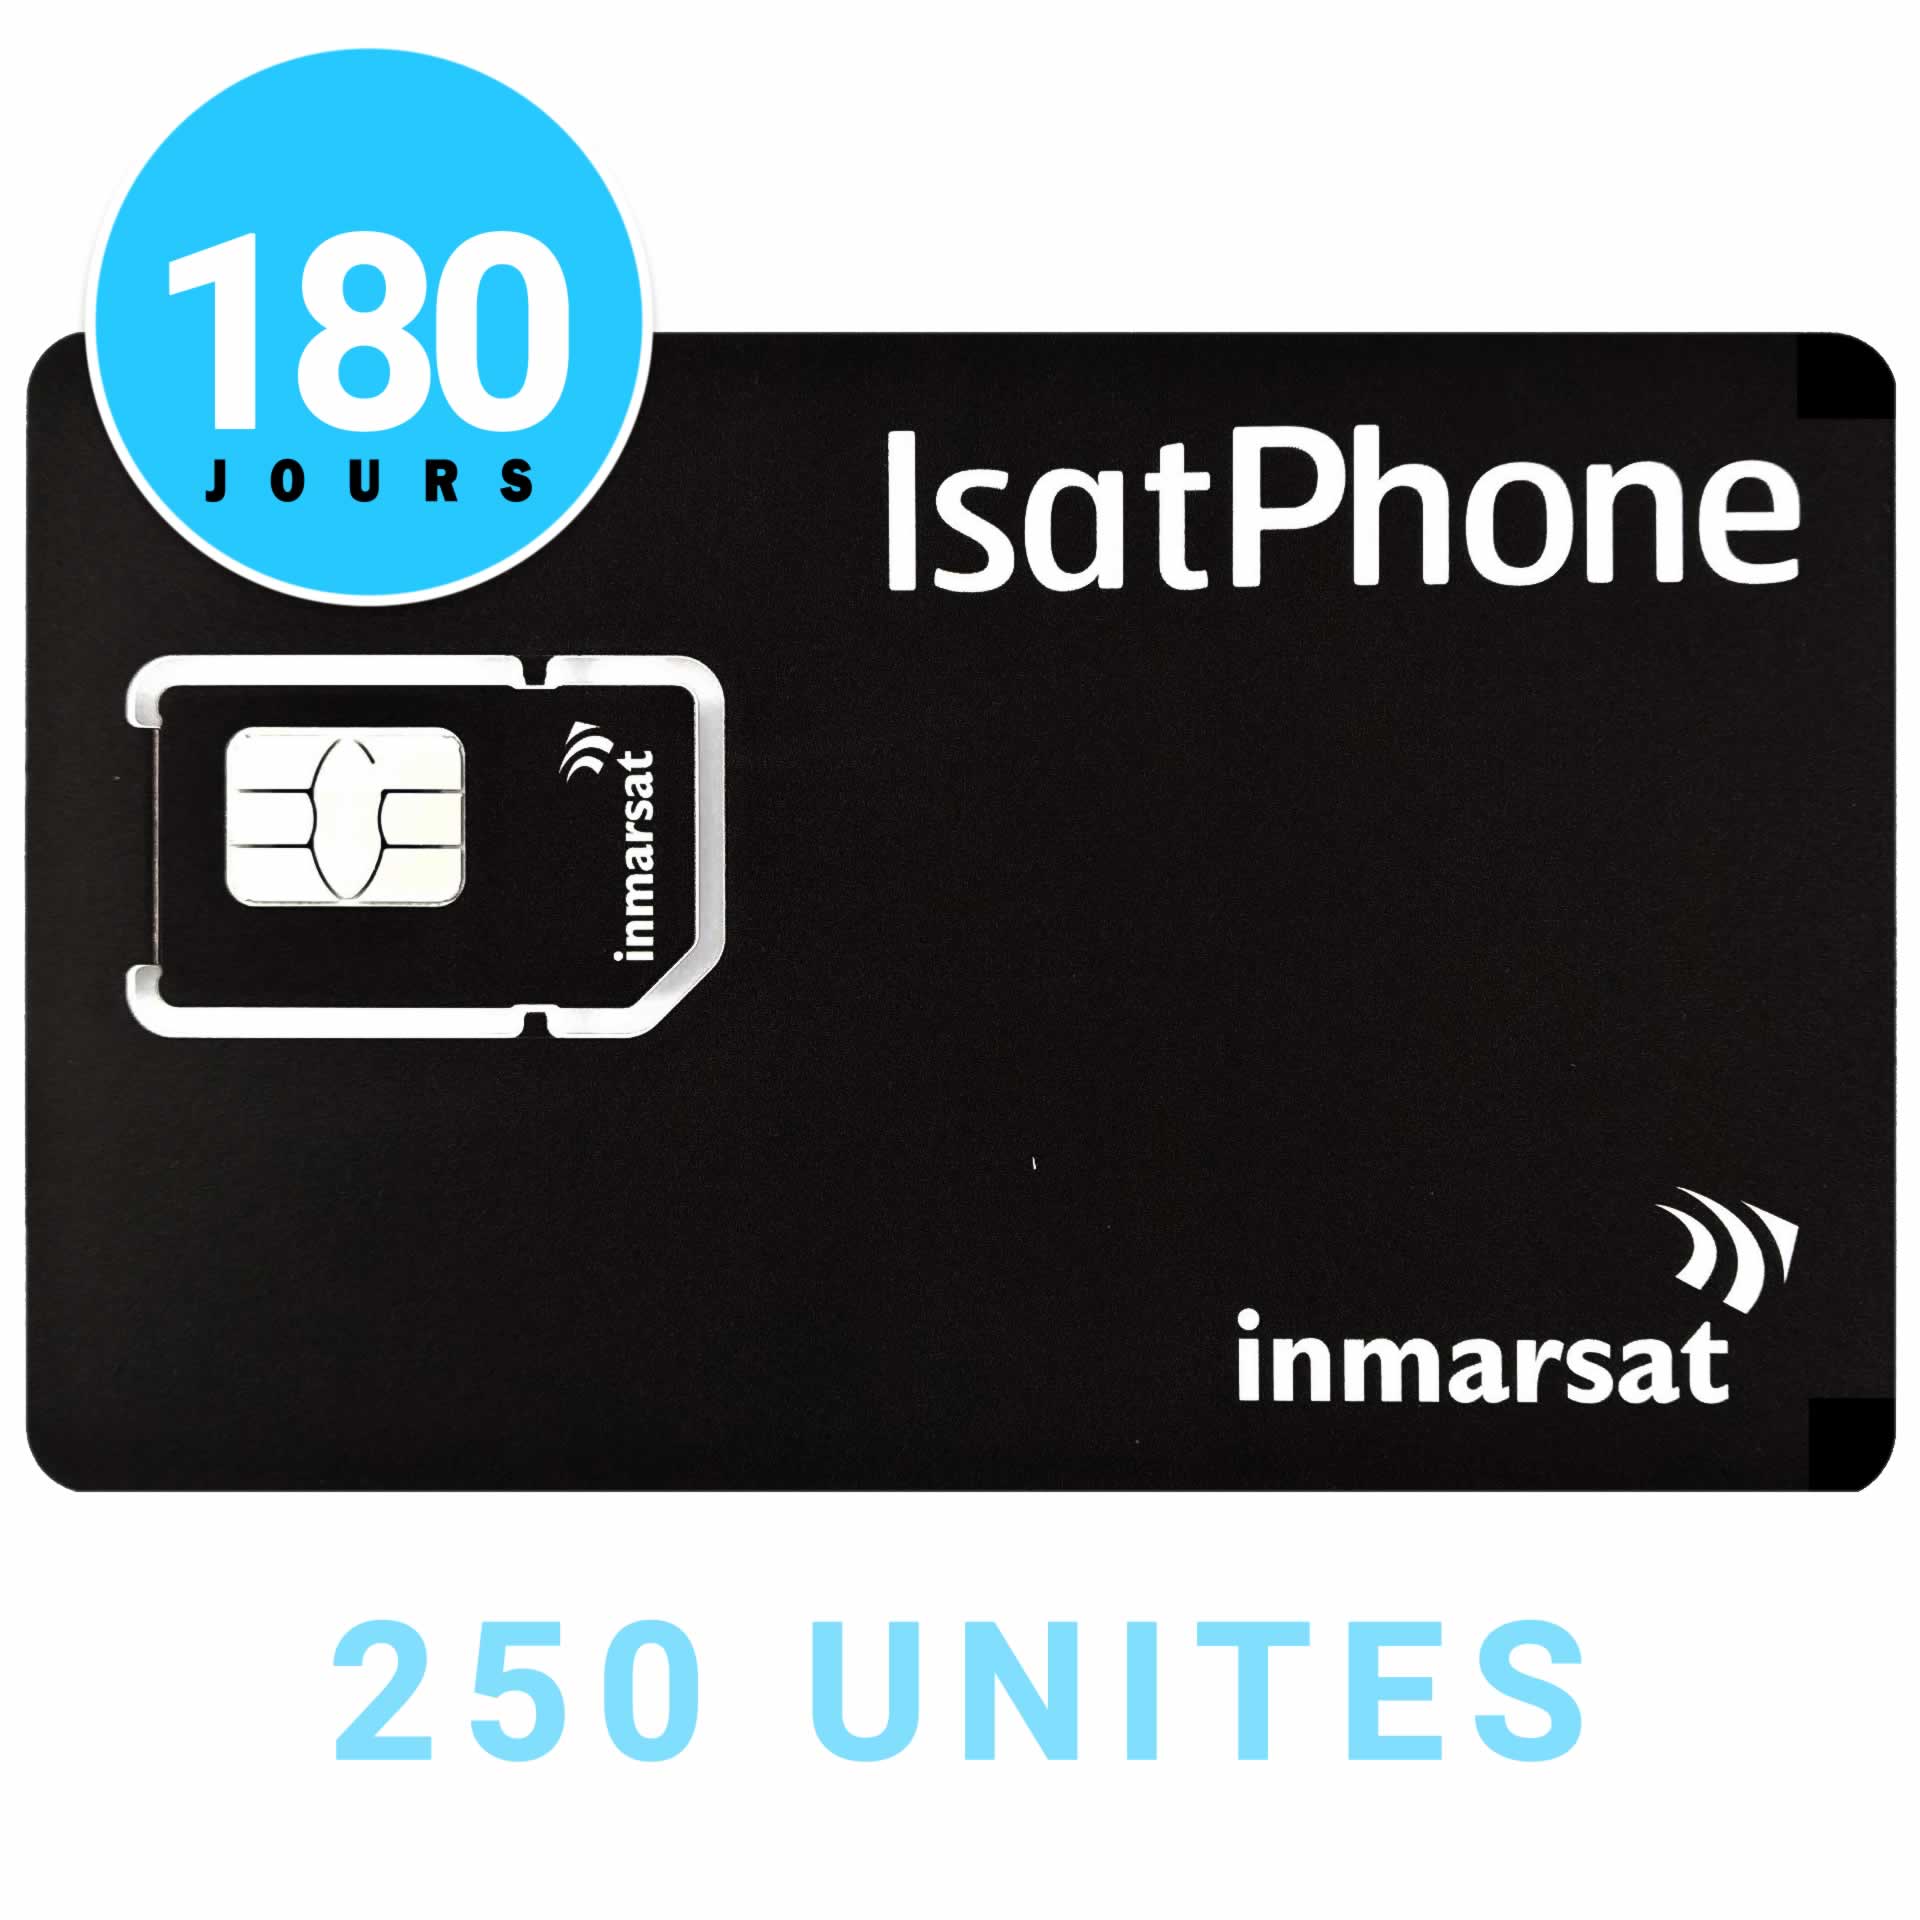 Carte Prépayée INMARSAT Rechargeable ISATPHONE - 250 UNITES - 180 JOURS